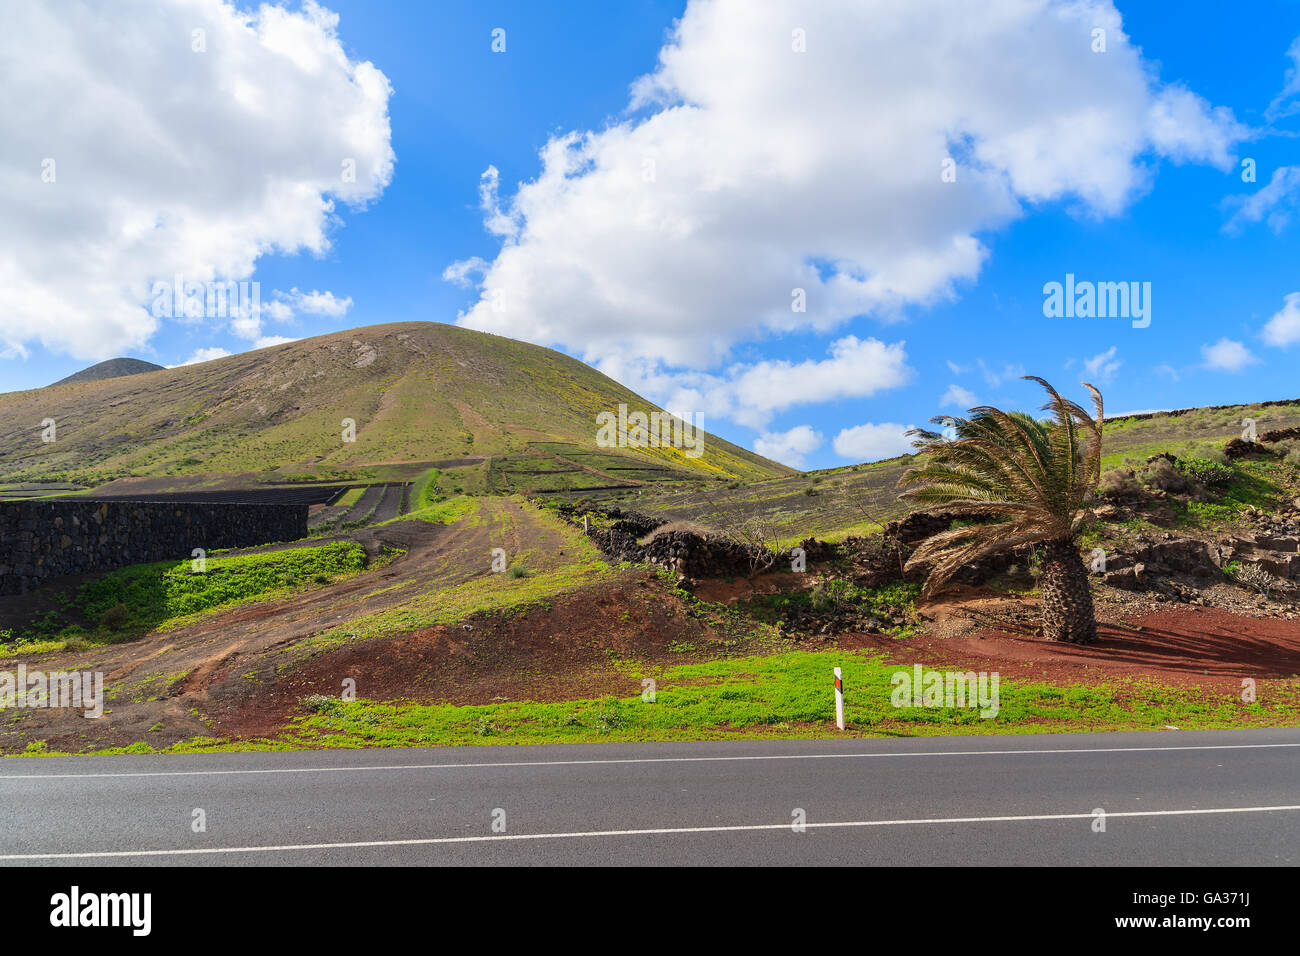 Road in mountain landscape of Lanzarote island near Yaiza, Canary Islands, Spain Stock Photo